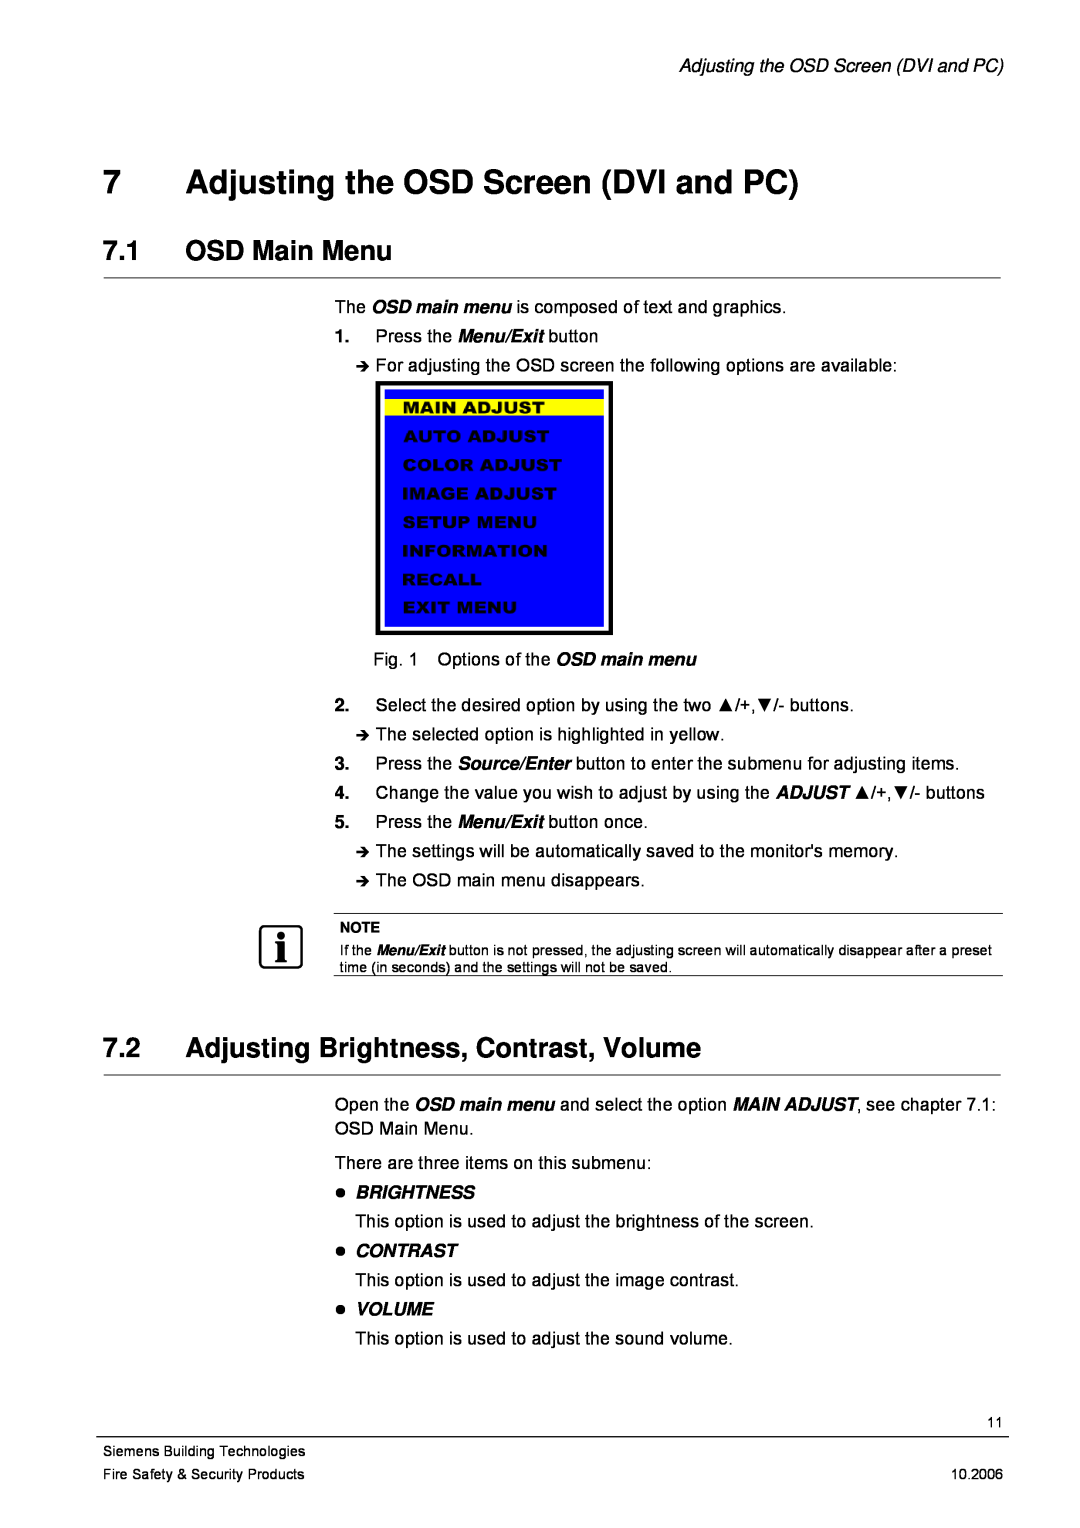 Siemens CMTC1920 Adjusting the OSD Screen DVI and PC, OSD Main Menu, Adjusting Brightness, Contrast, Volume, z BRIGHTNESS 